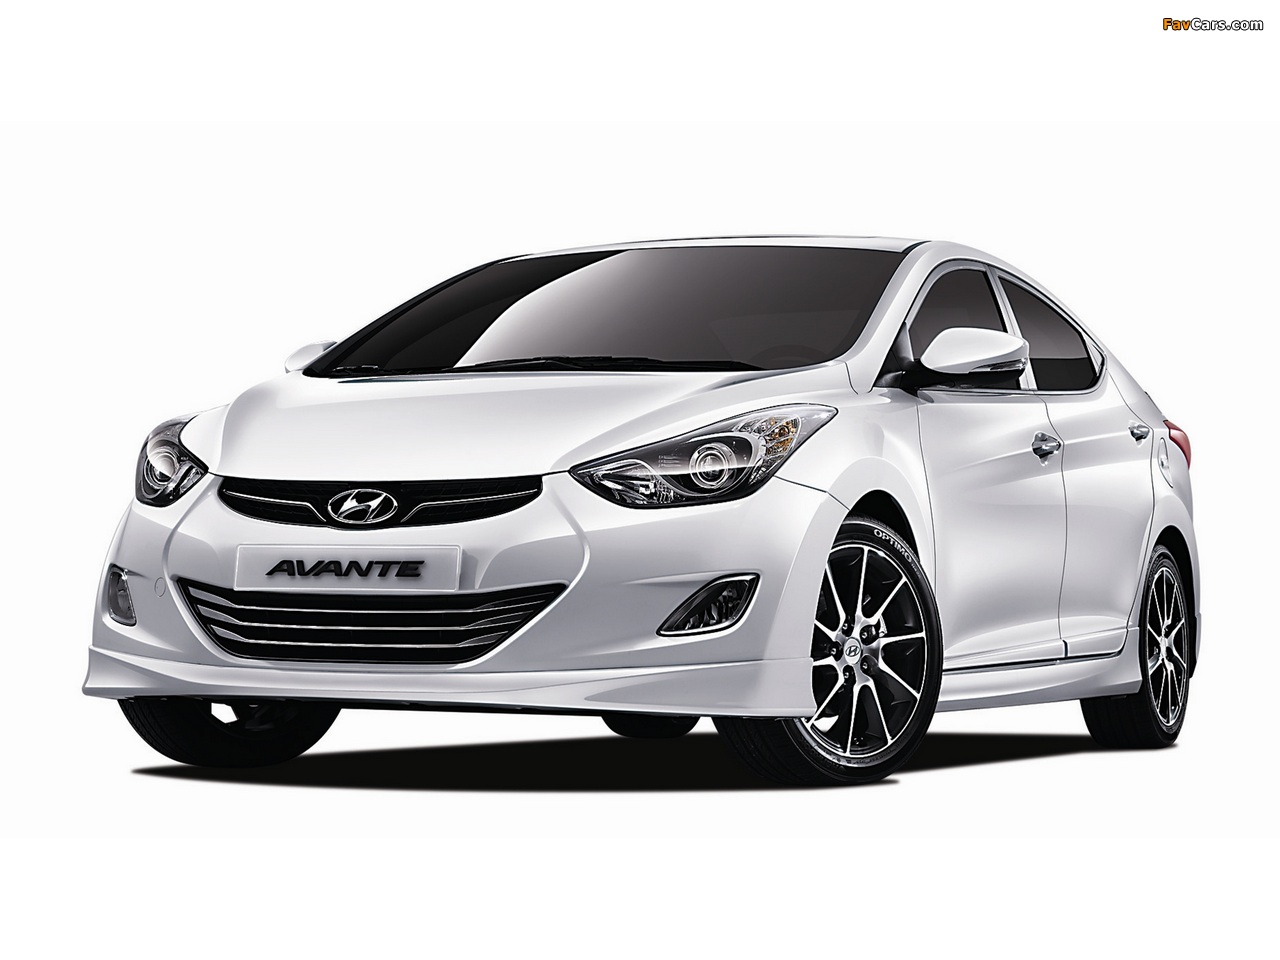 Hyundai Avante (MD) 2010 photos (1280 x 960)